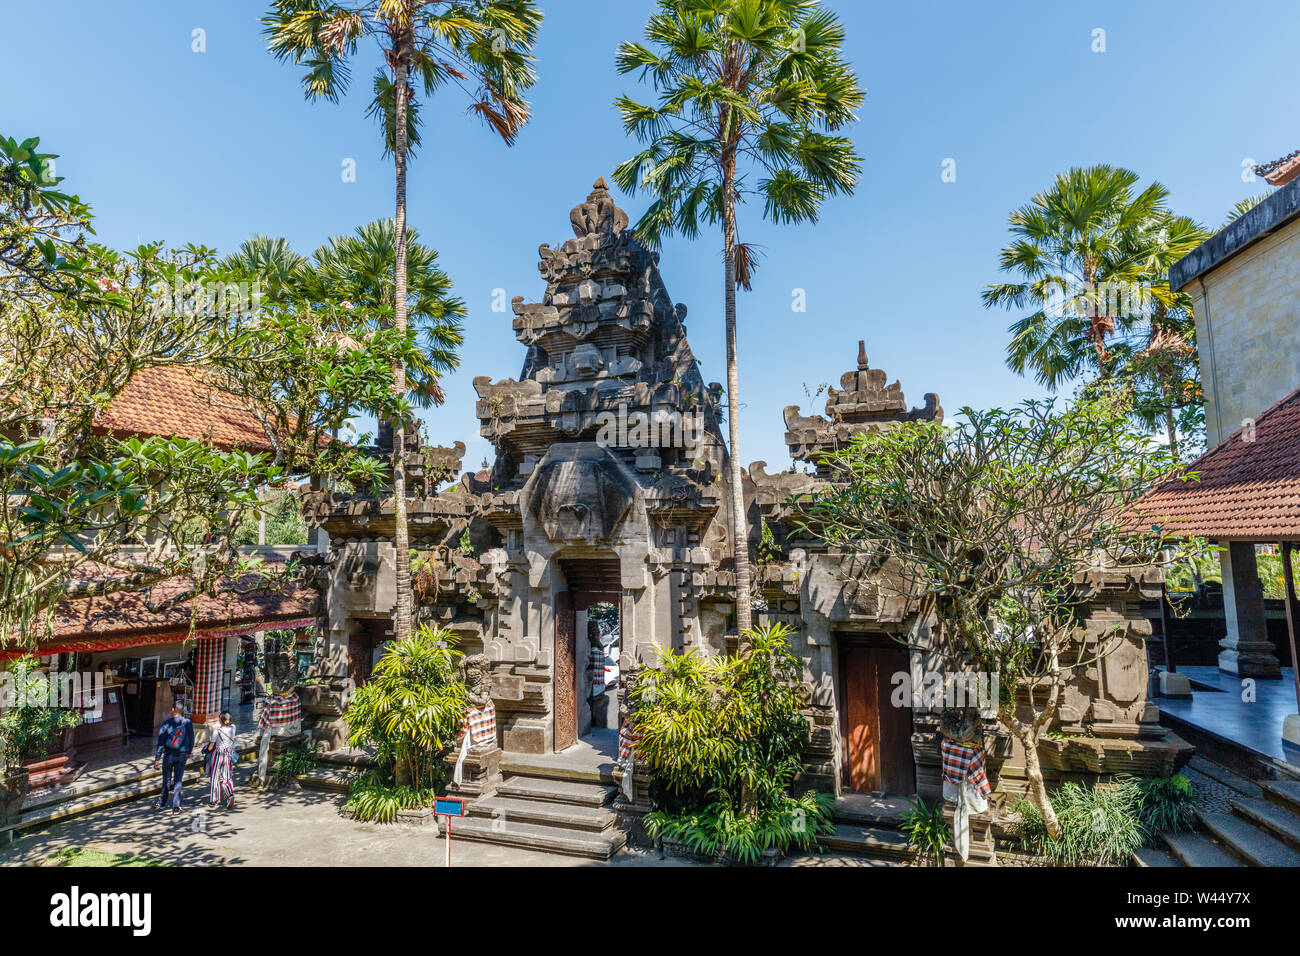 Entrance gate of art museum Puri Lukisan in Ubud, Bali, Indonesia. Stock Photo